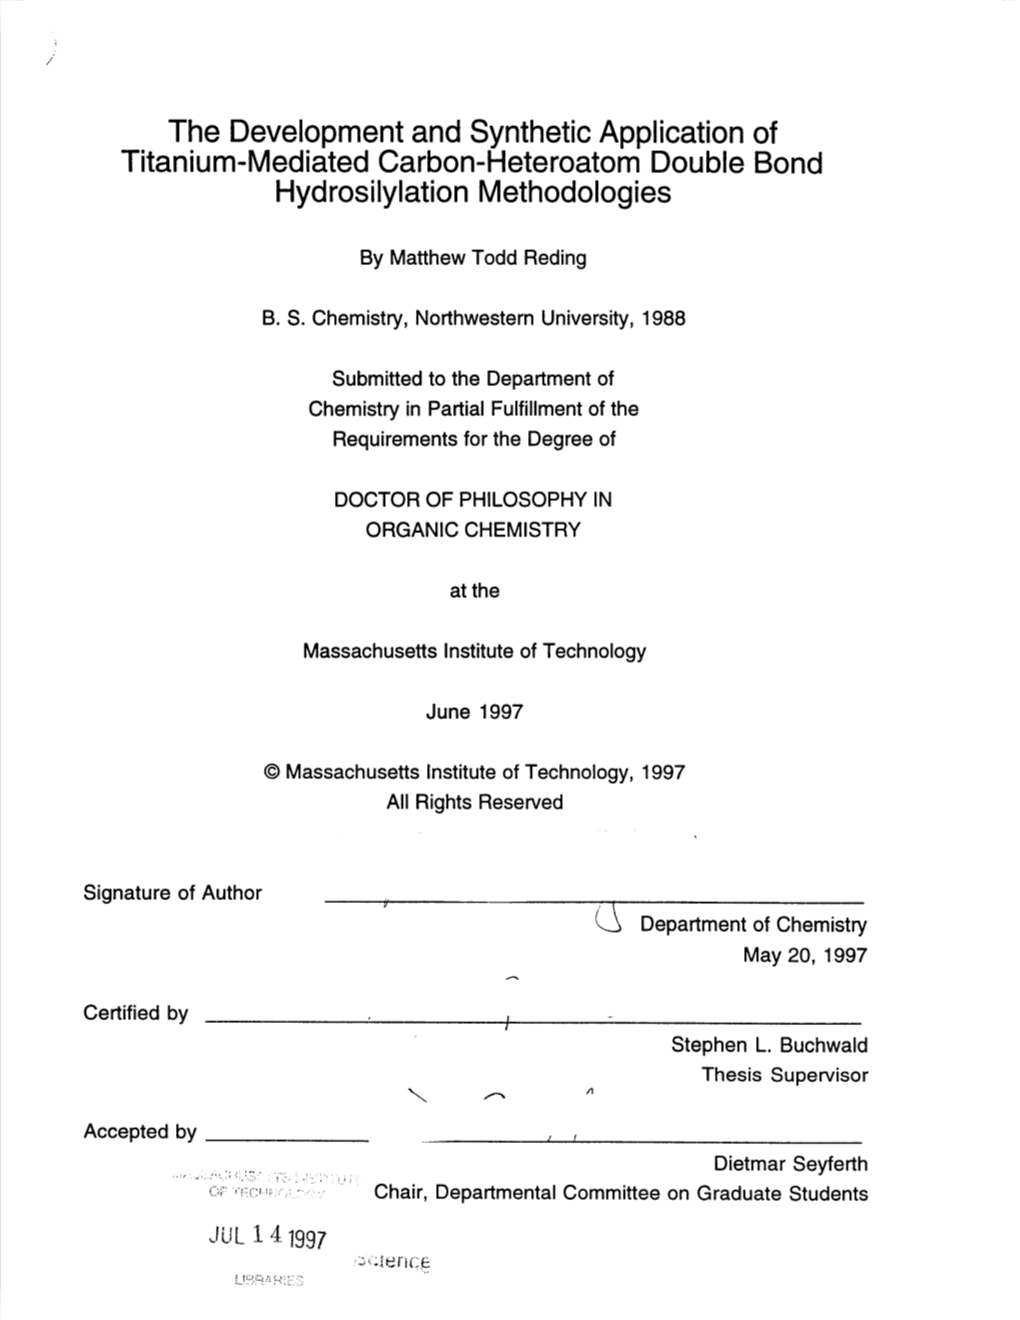 The Development and Synthetic Application of Titanium-Mediated Carbon-Heteroatom Double Bond Hydrosilylation Methodologies